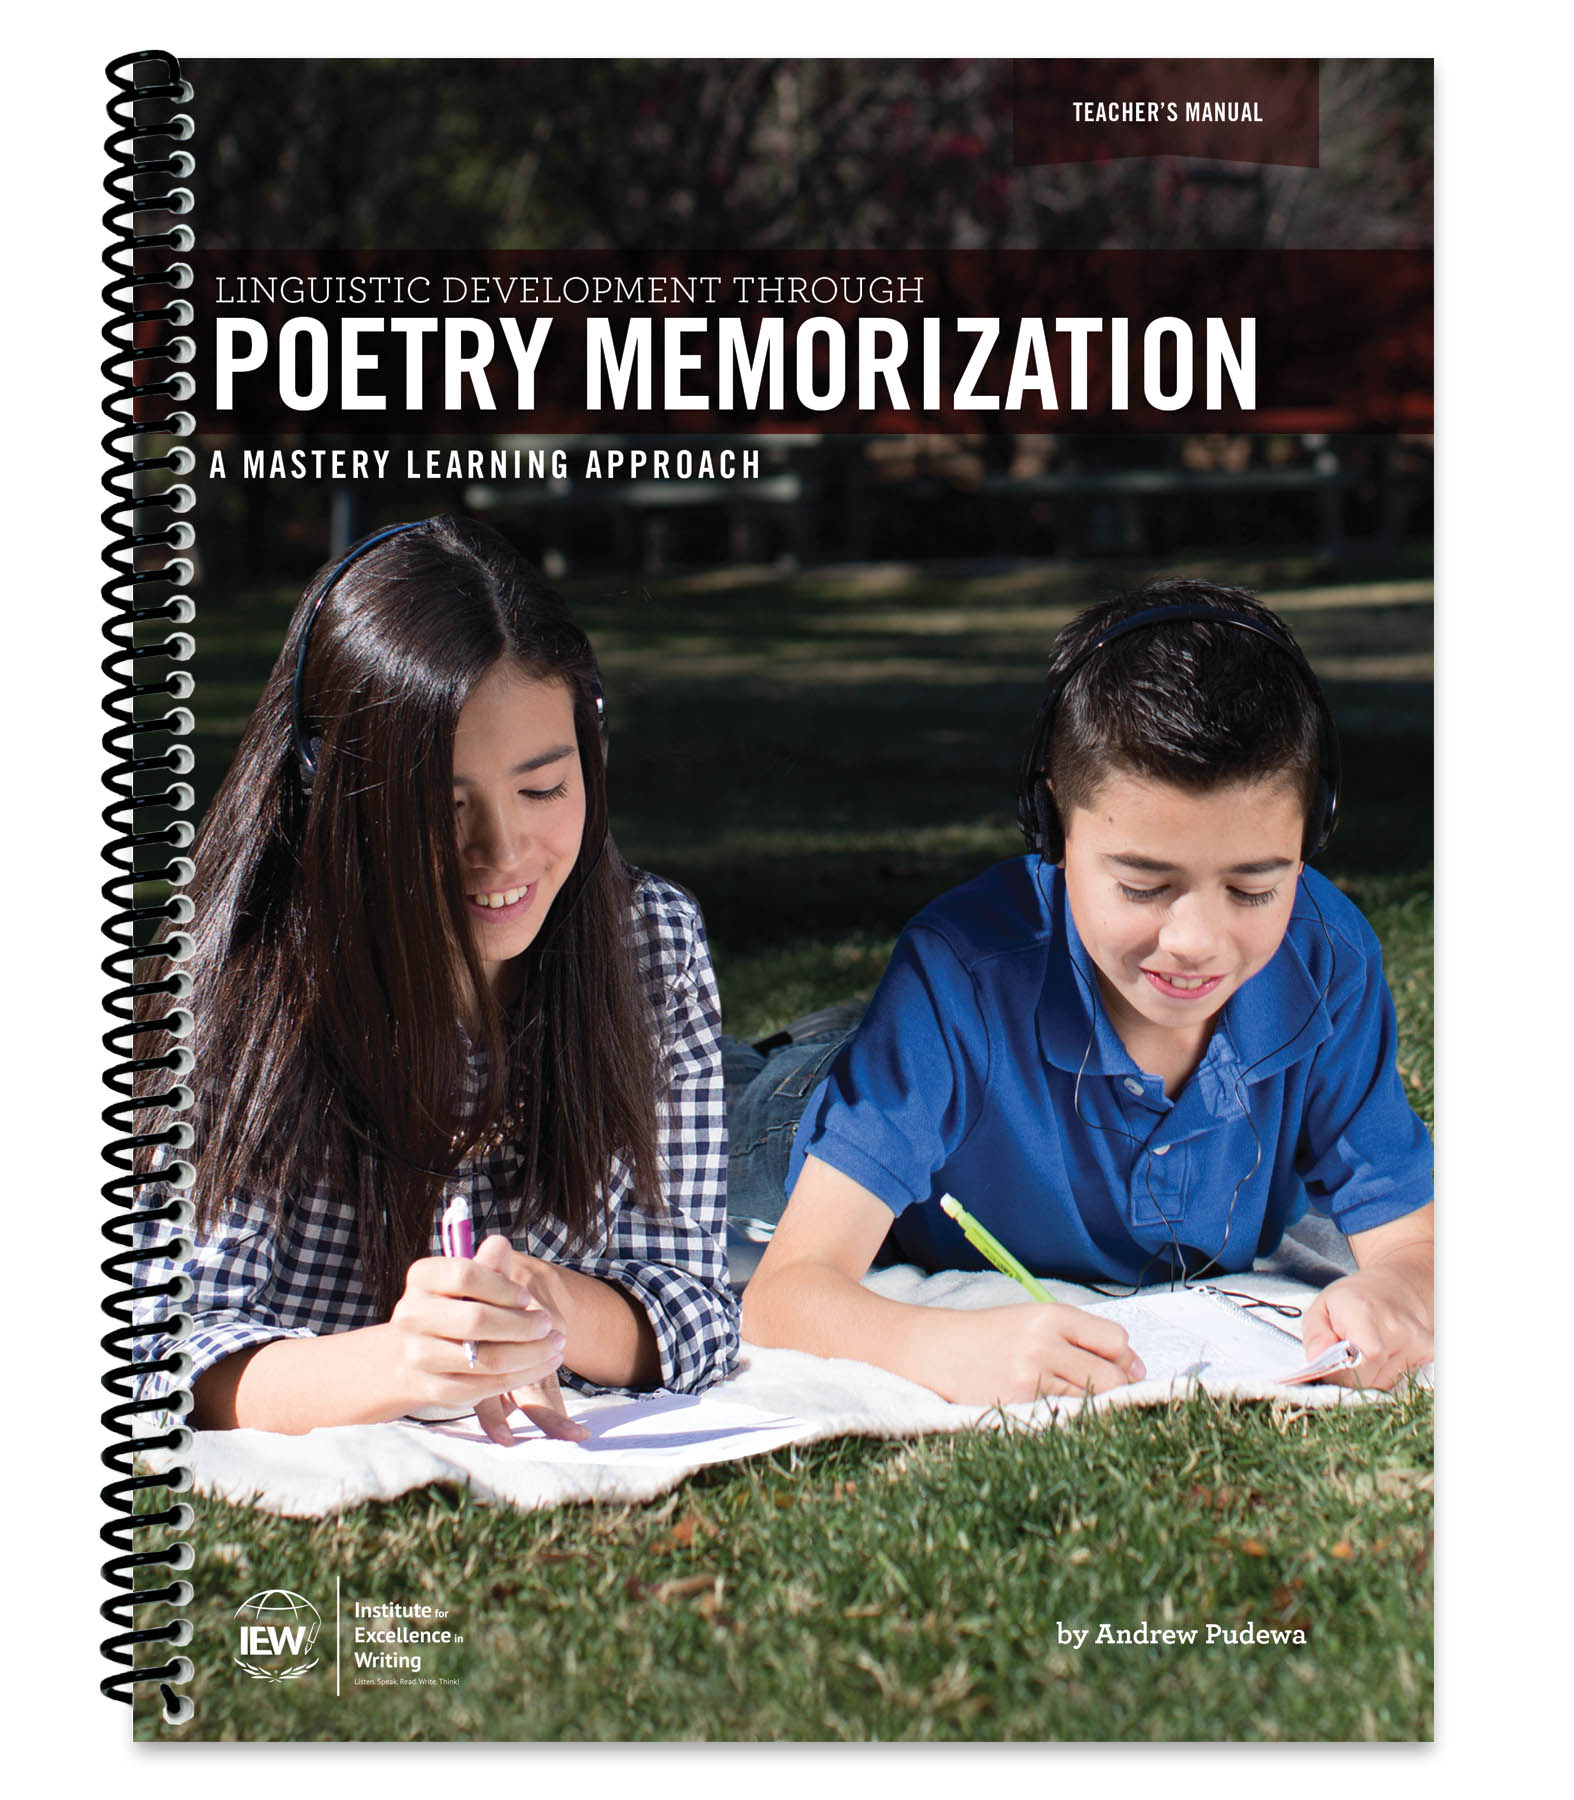 Linguistic Development through Poetry Memorization [Teacher's Manual only]